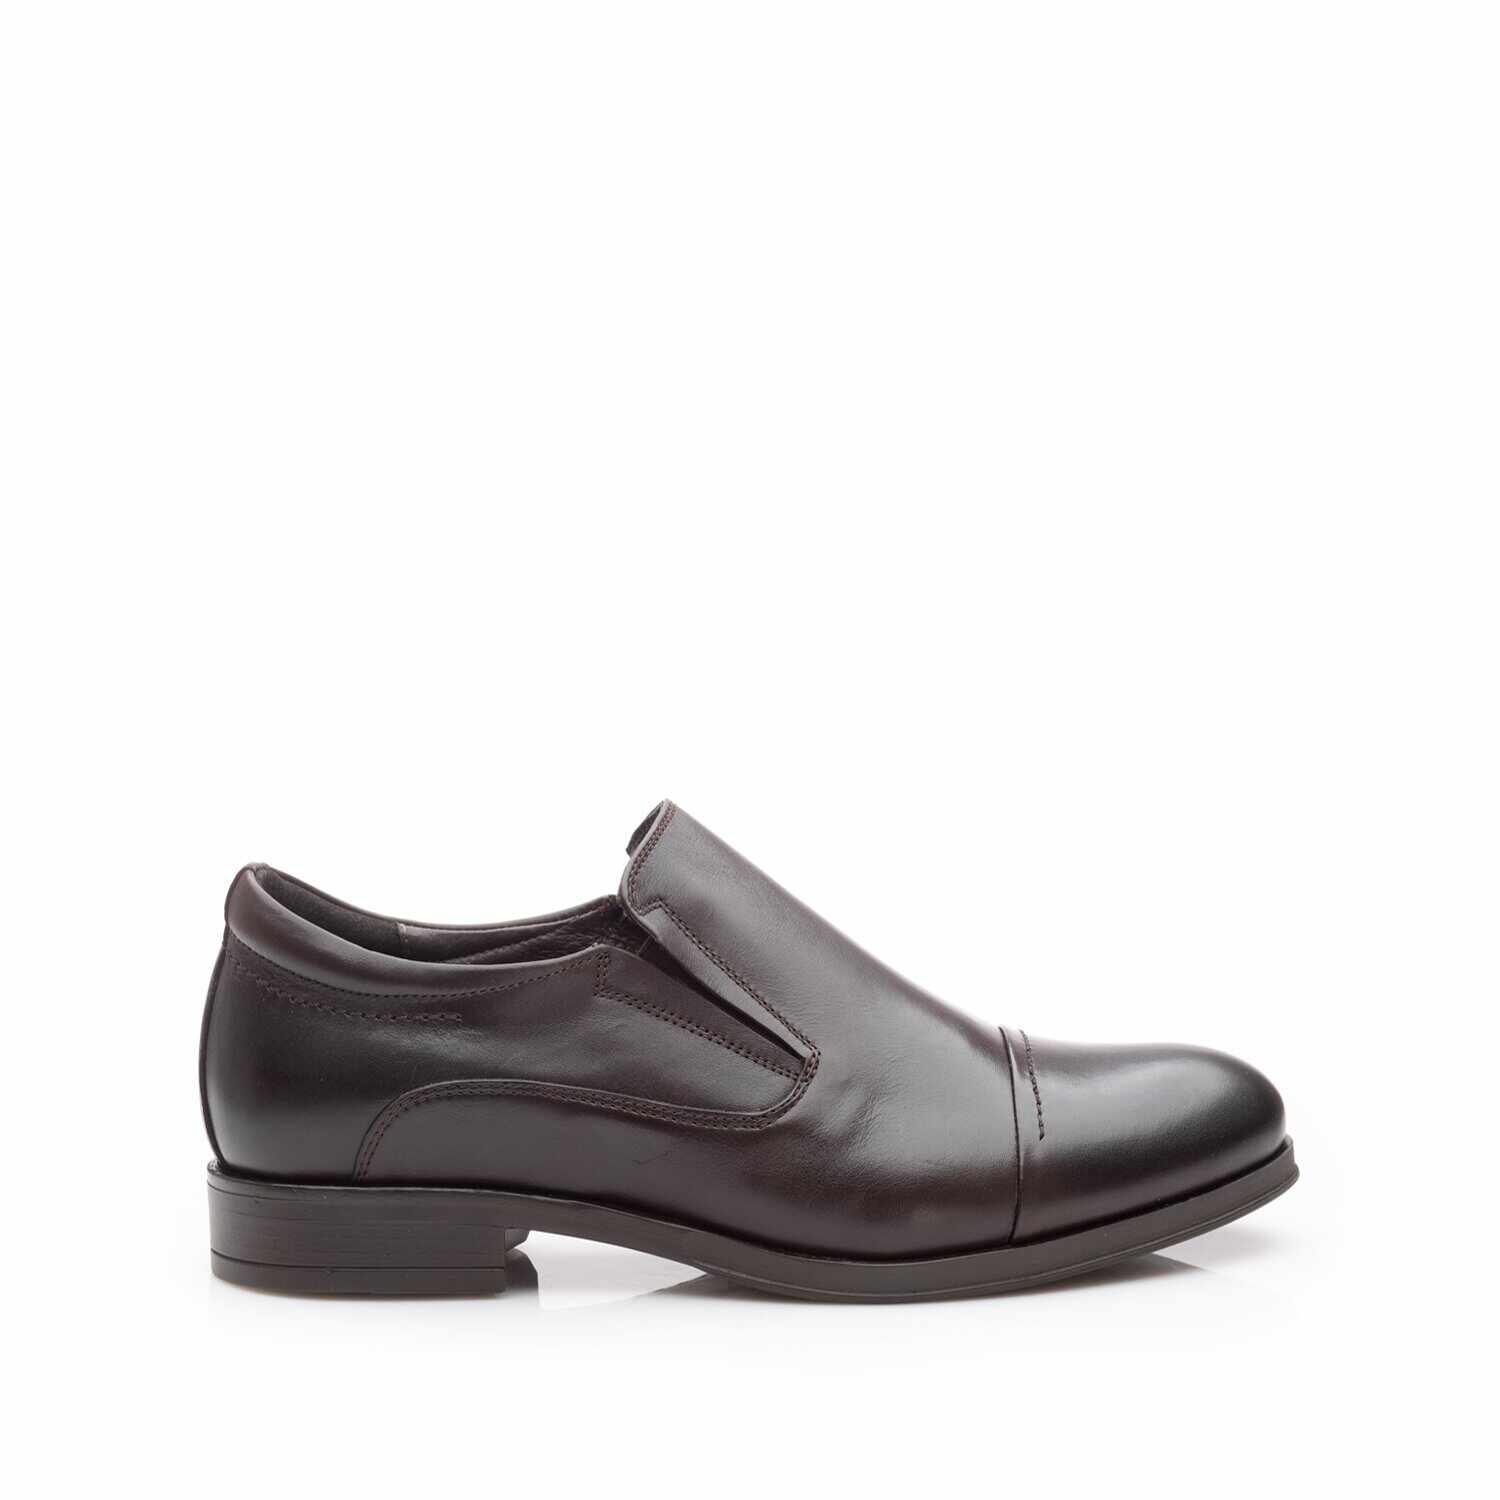 Pantofi eleganti barbati din piele naturala, Leofex - 970 Maro box